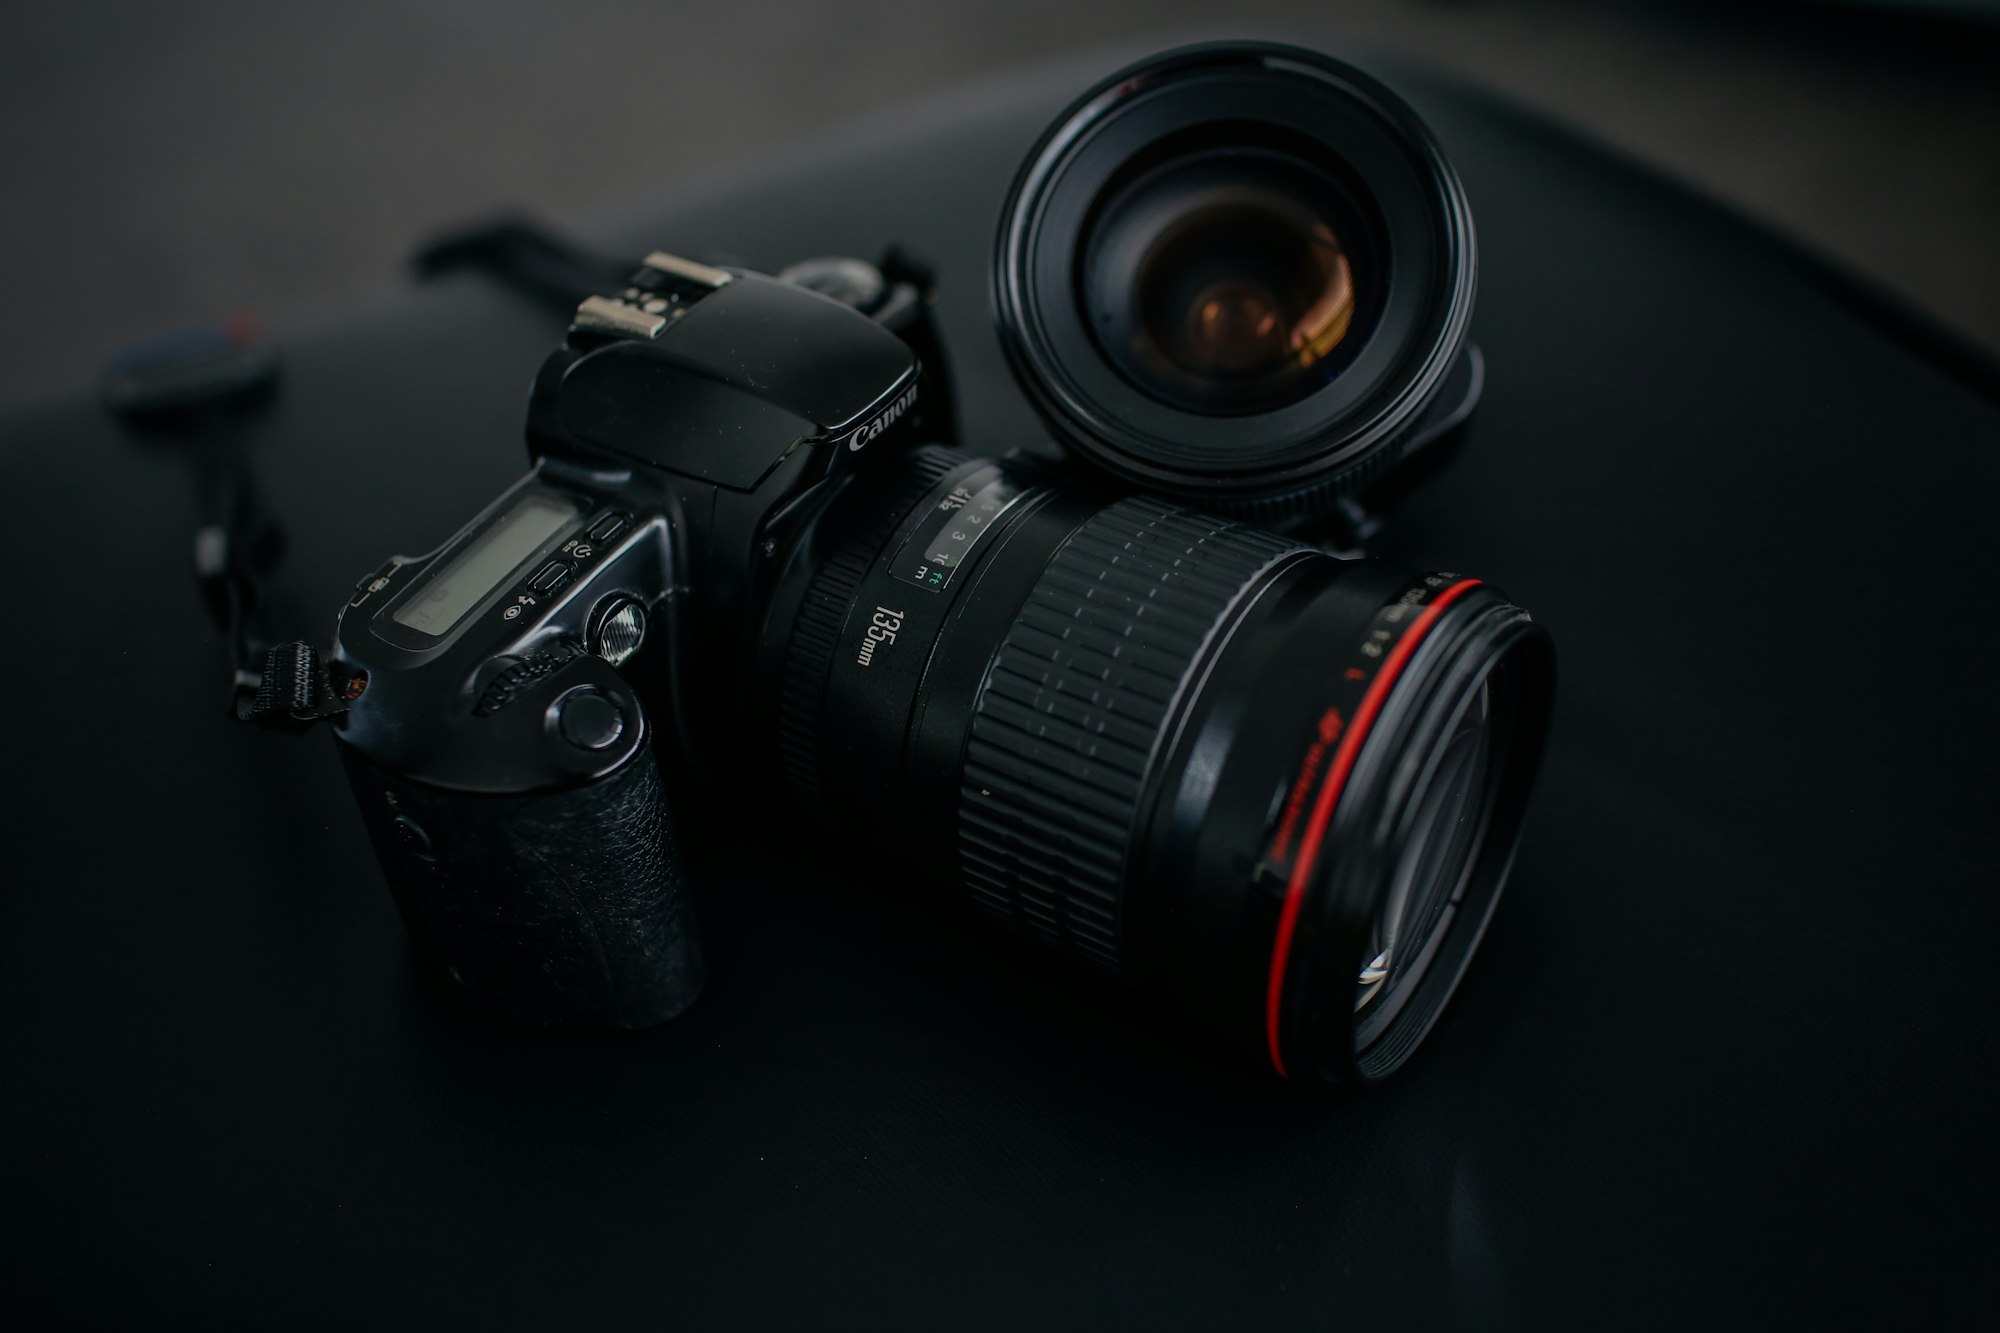 Canon camera 135mm lens